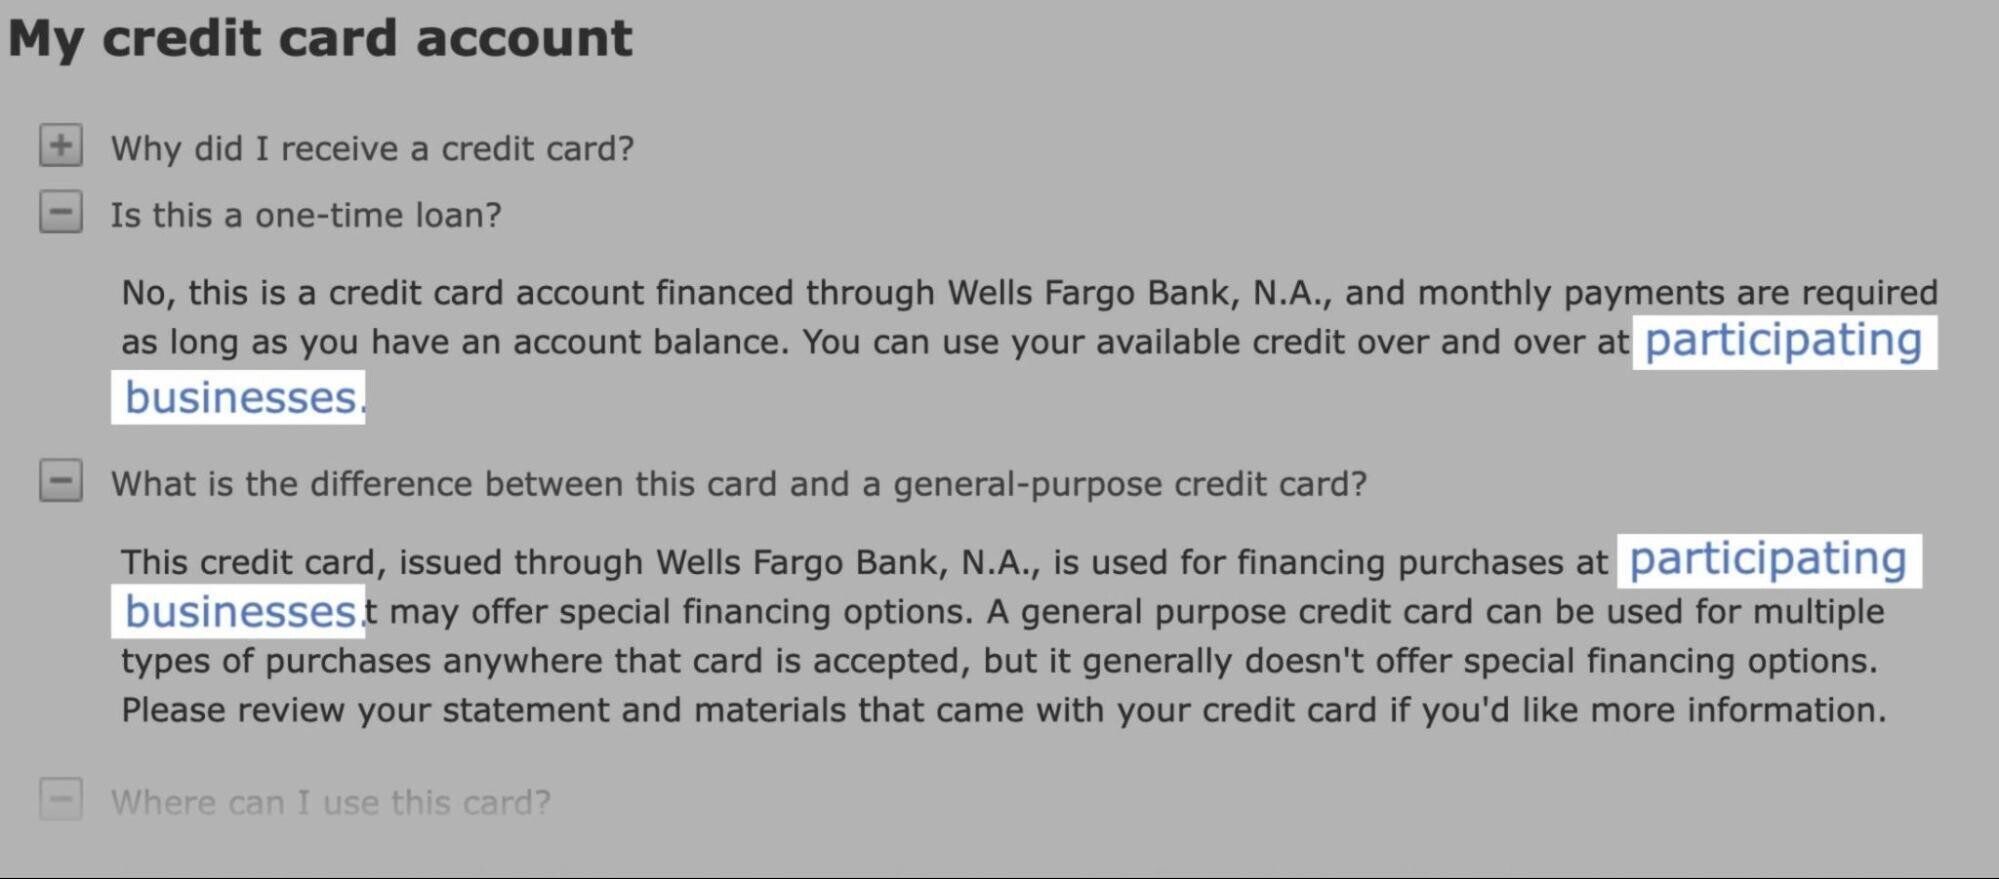 wells fargo bank specific faq